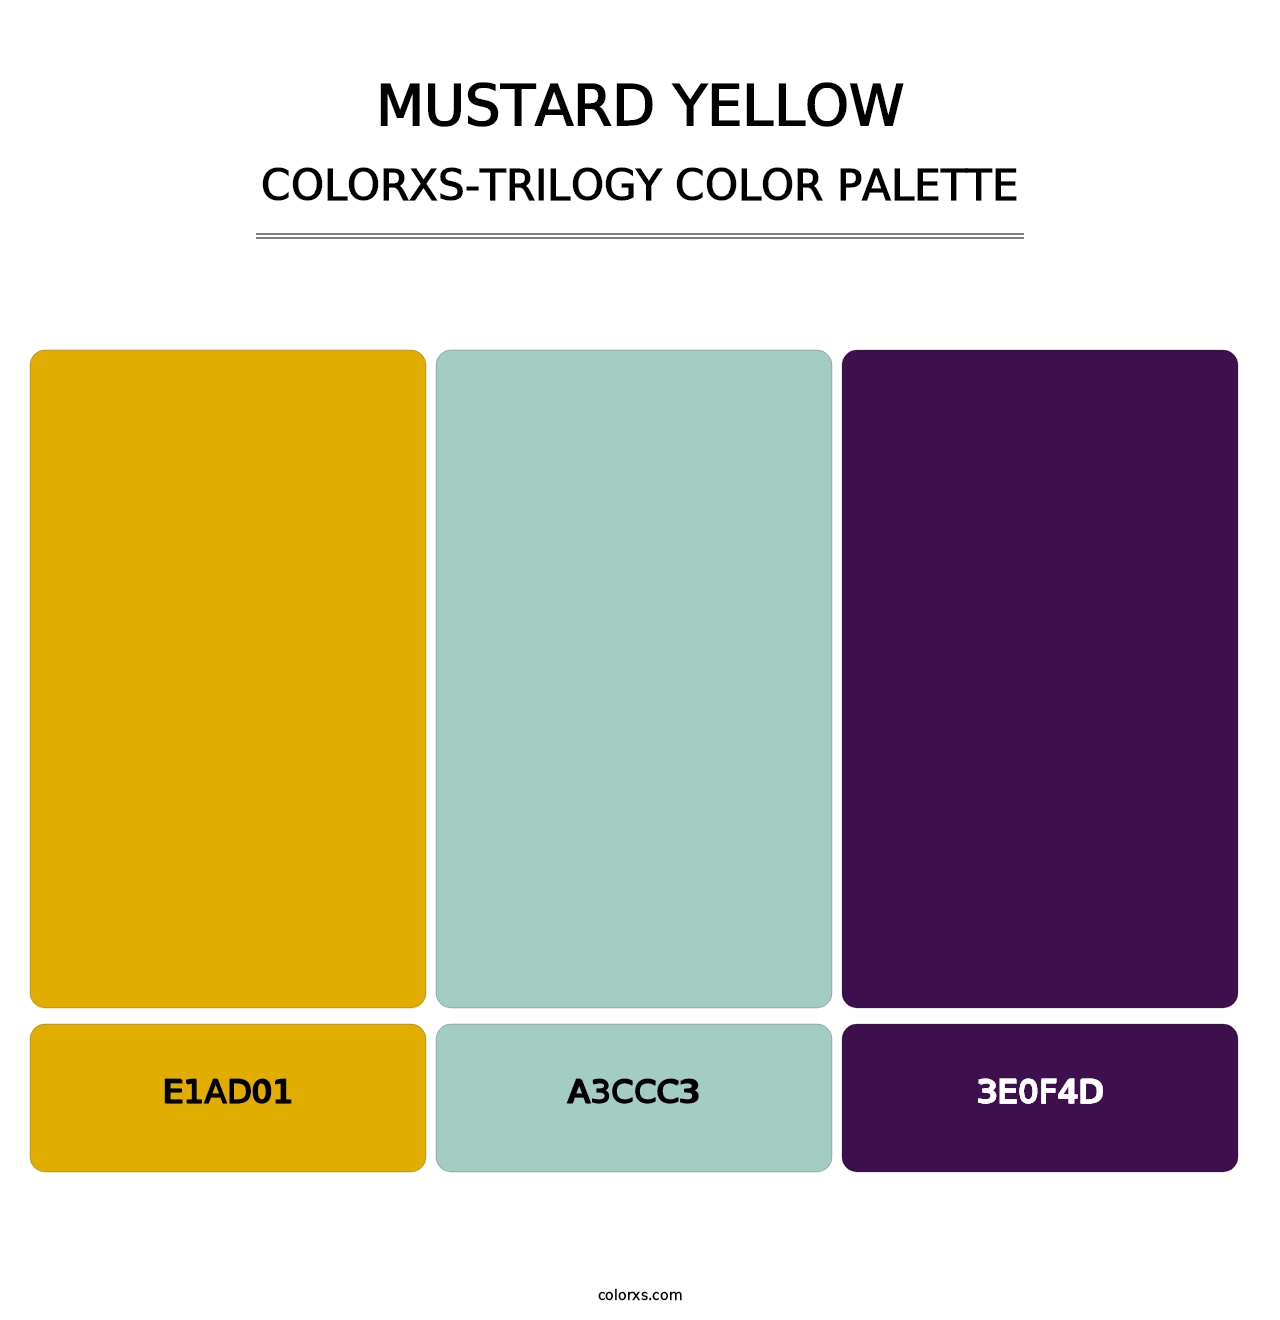 Mustard Yellow - Colorxs Trilogy Palette